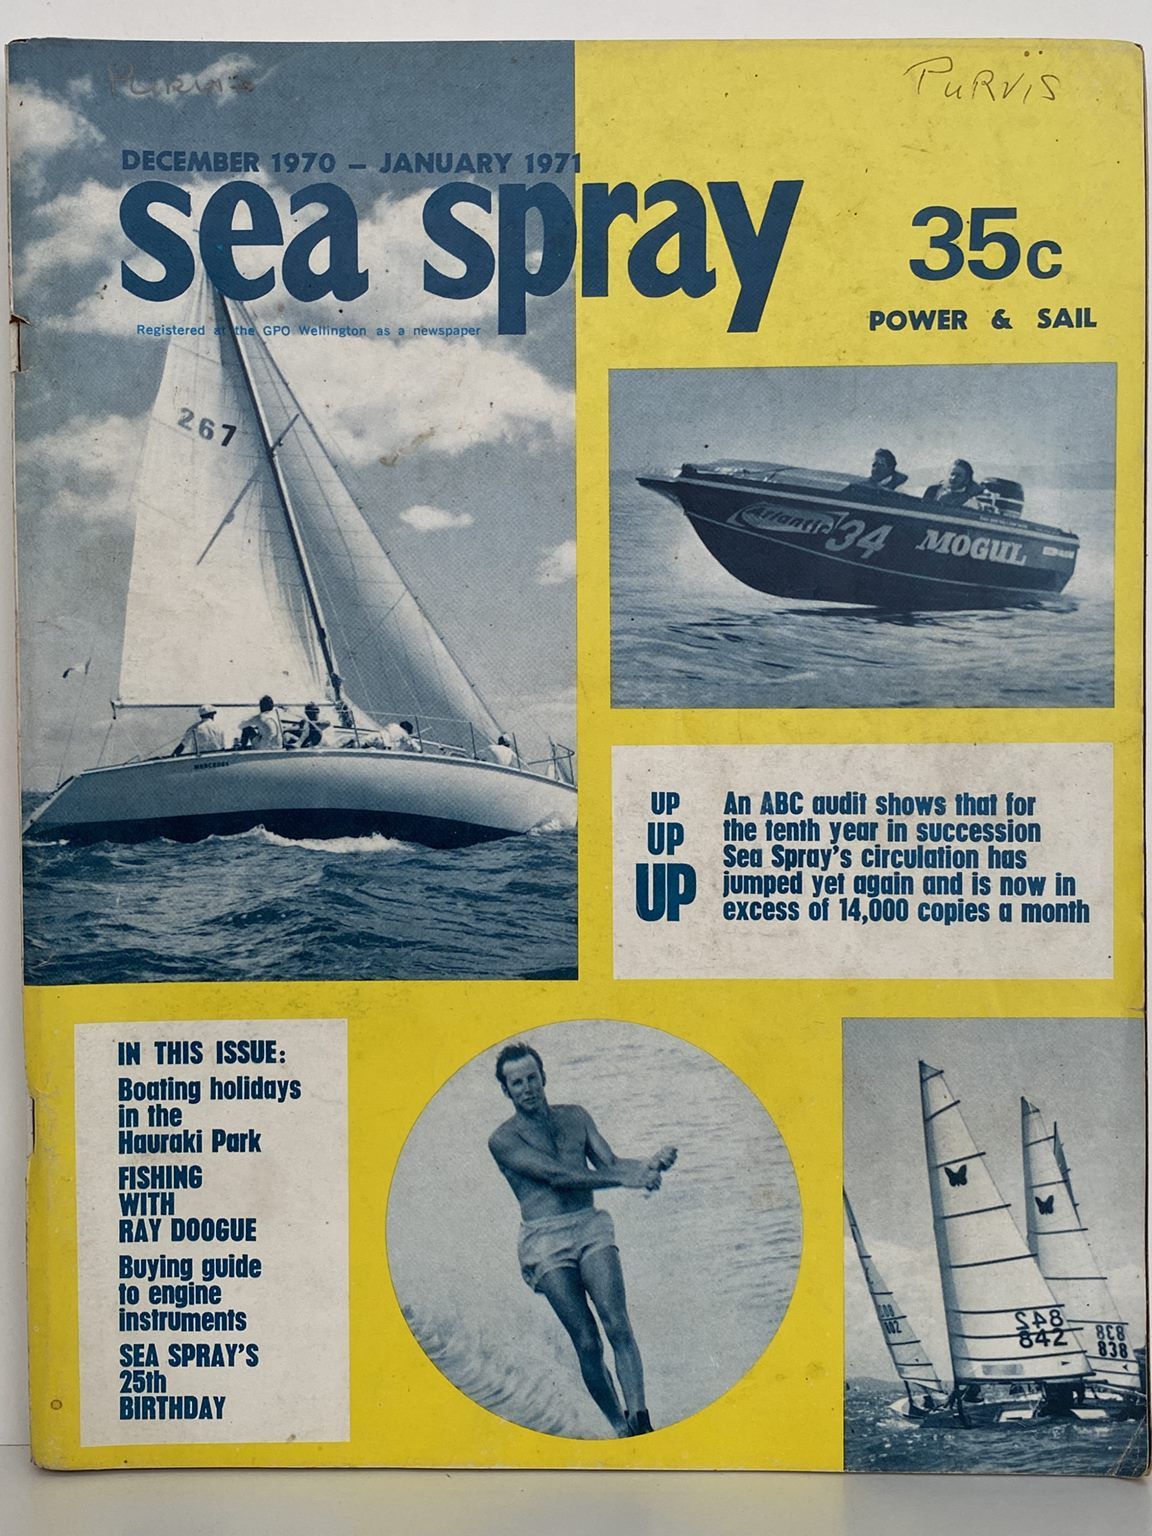 VINTAGE MAGAZINE: Sea Spray / Power & Sail Vol. 25, No. 11 - Dec 1970 / Jan 1971